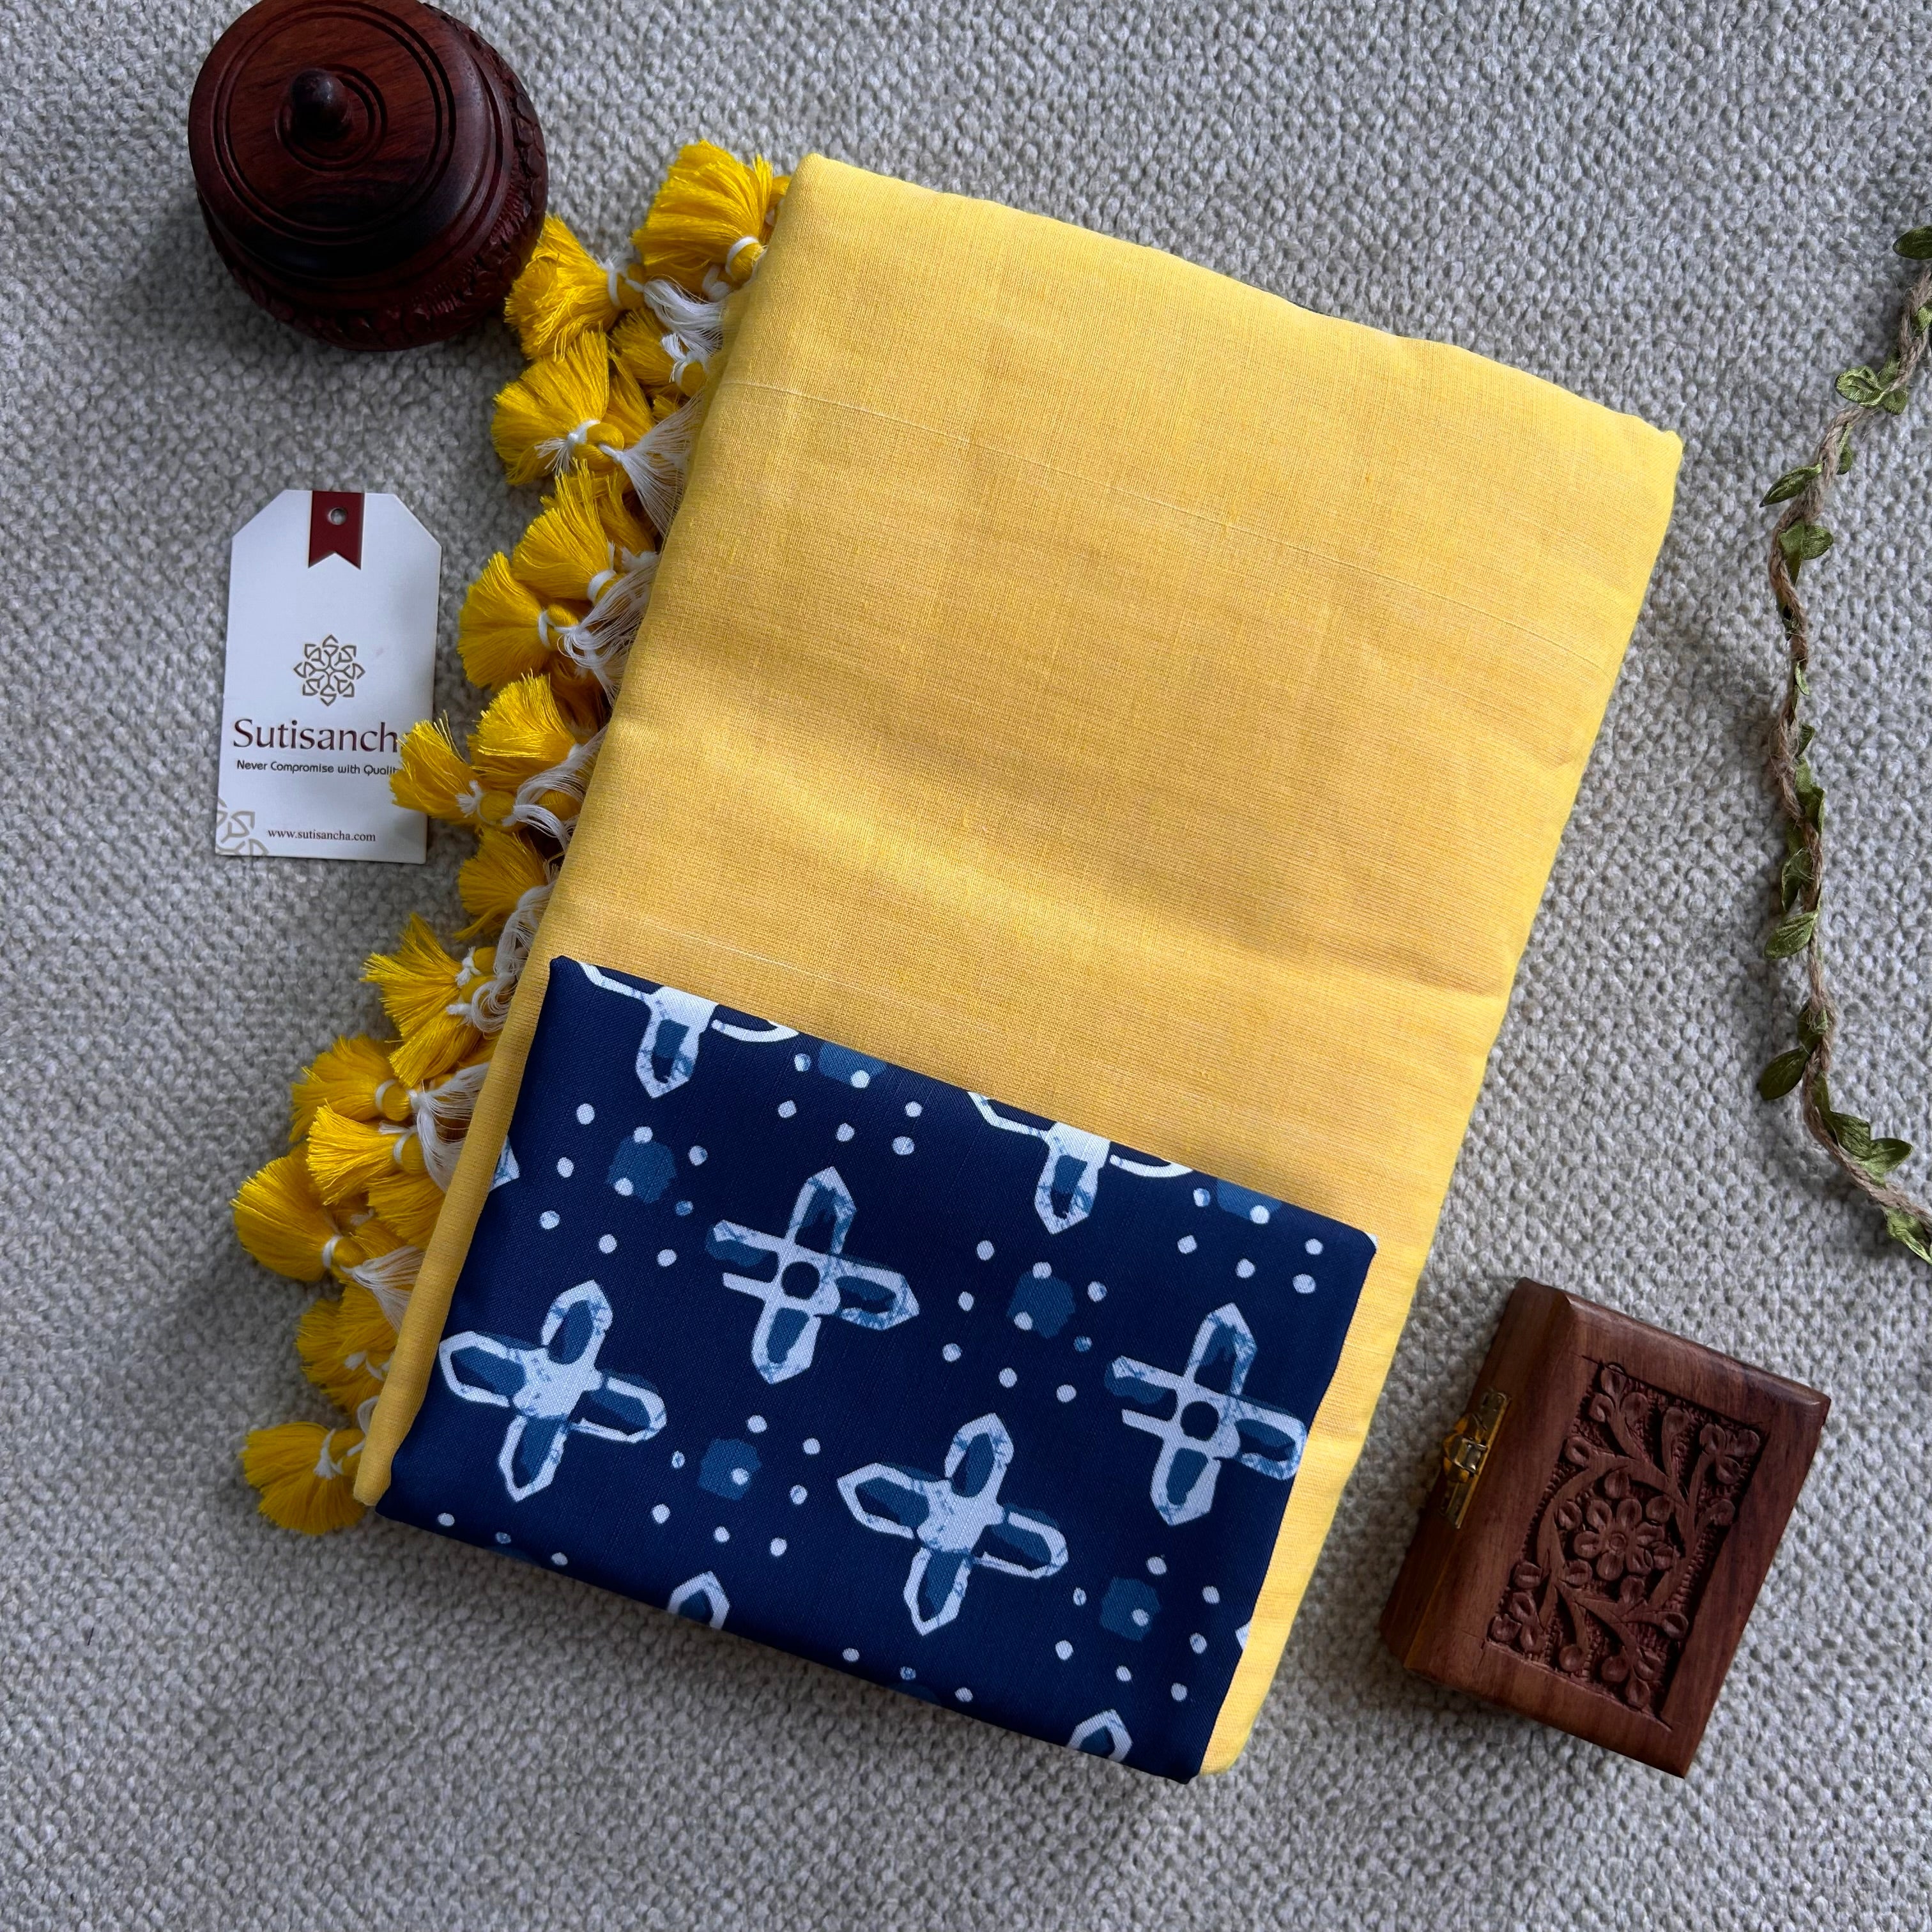 Sutisancha Yellow Colour Handloom Cotton Saree